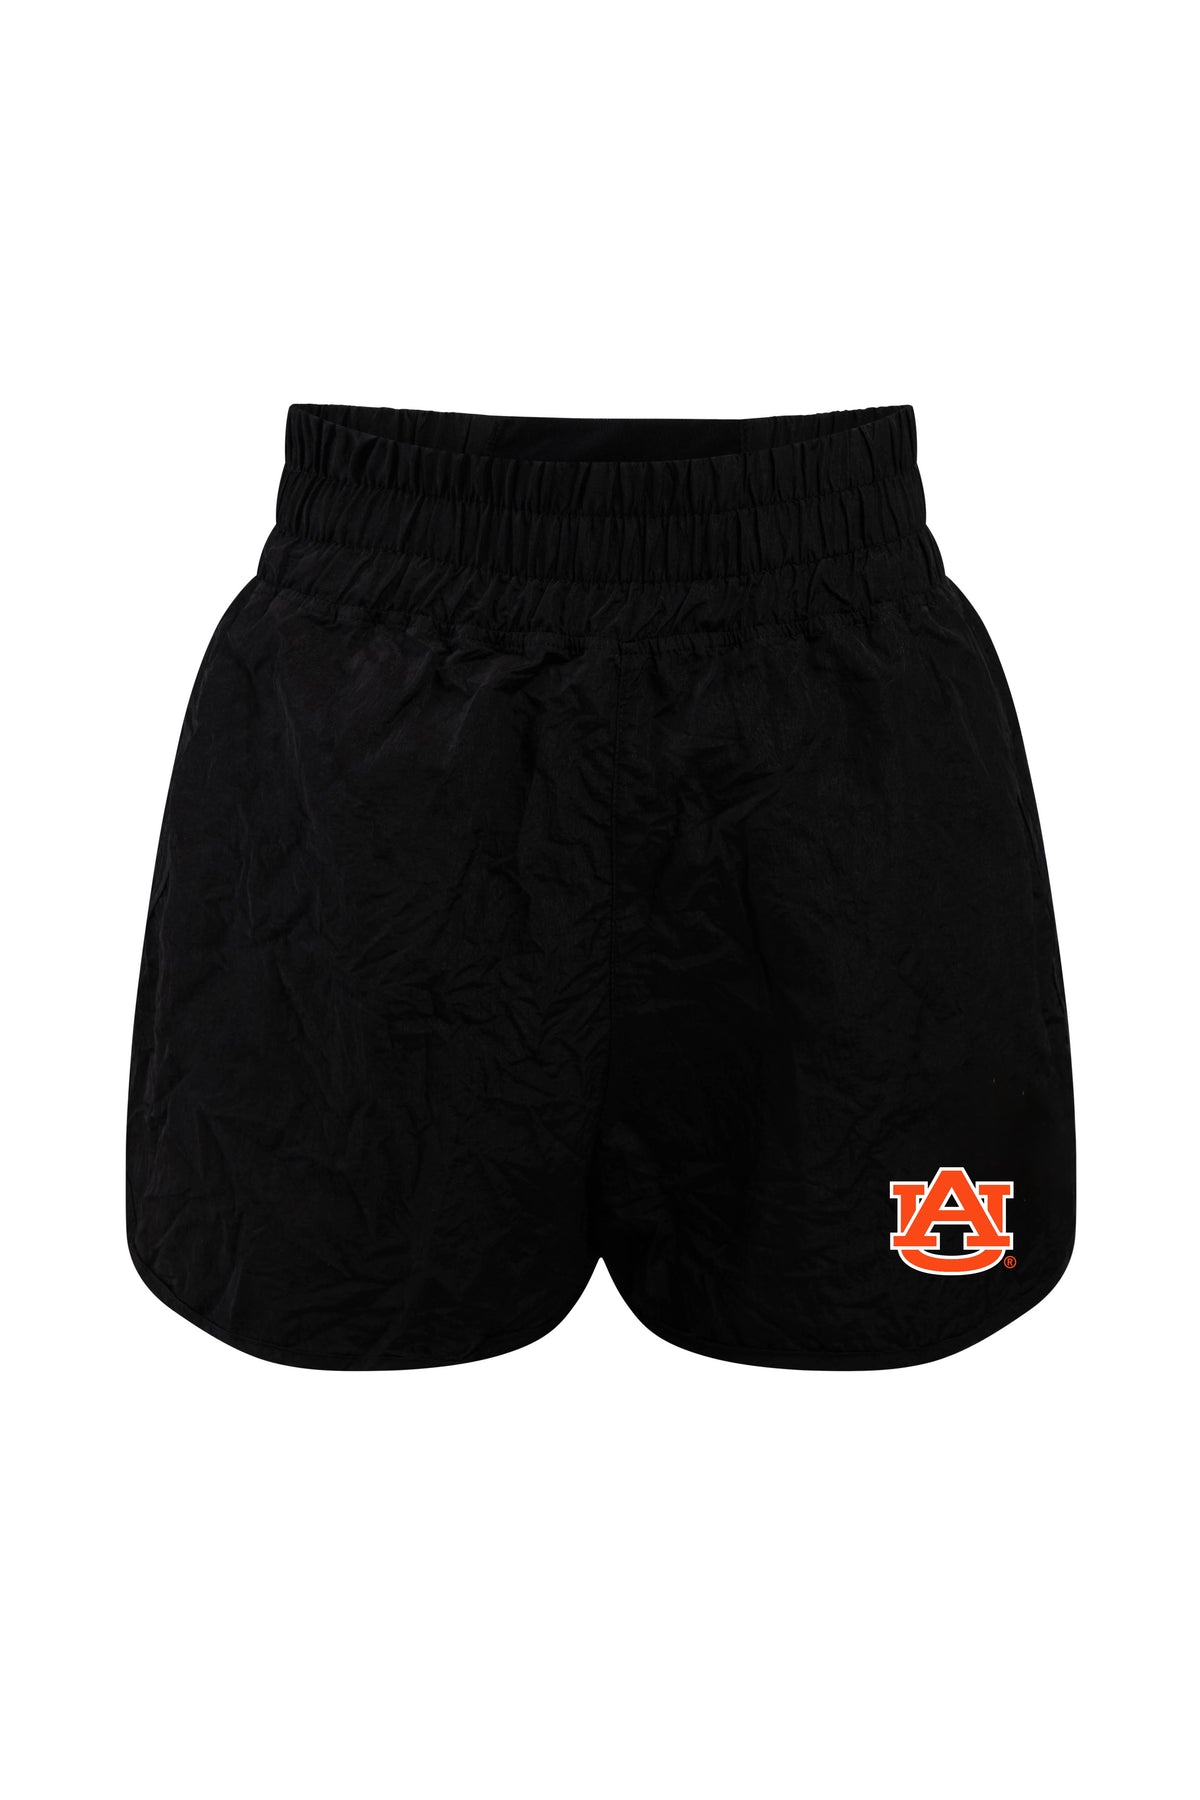 Auburn University Boxer Short